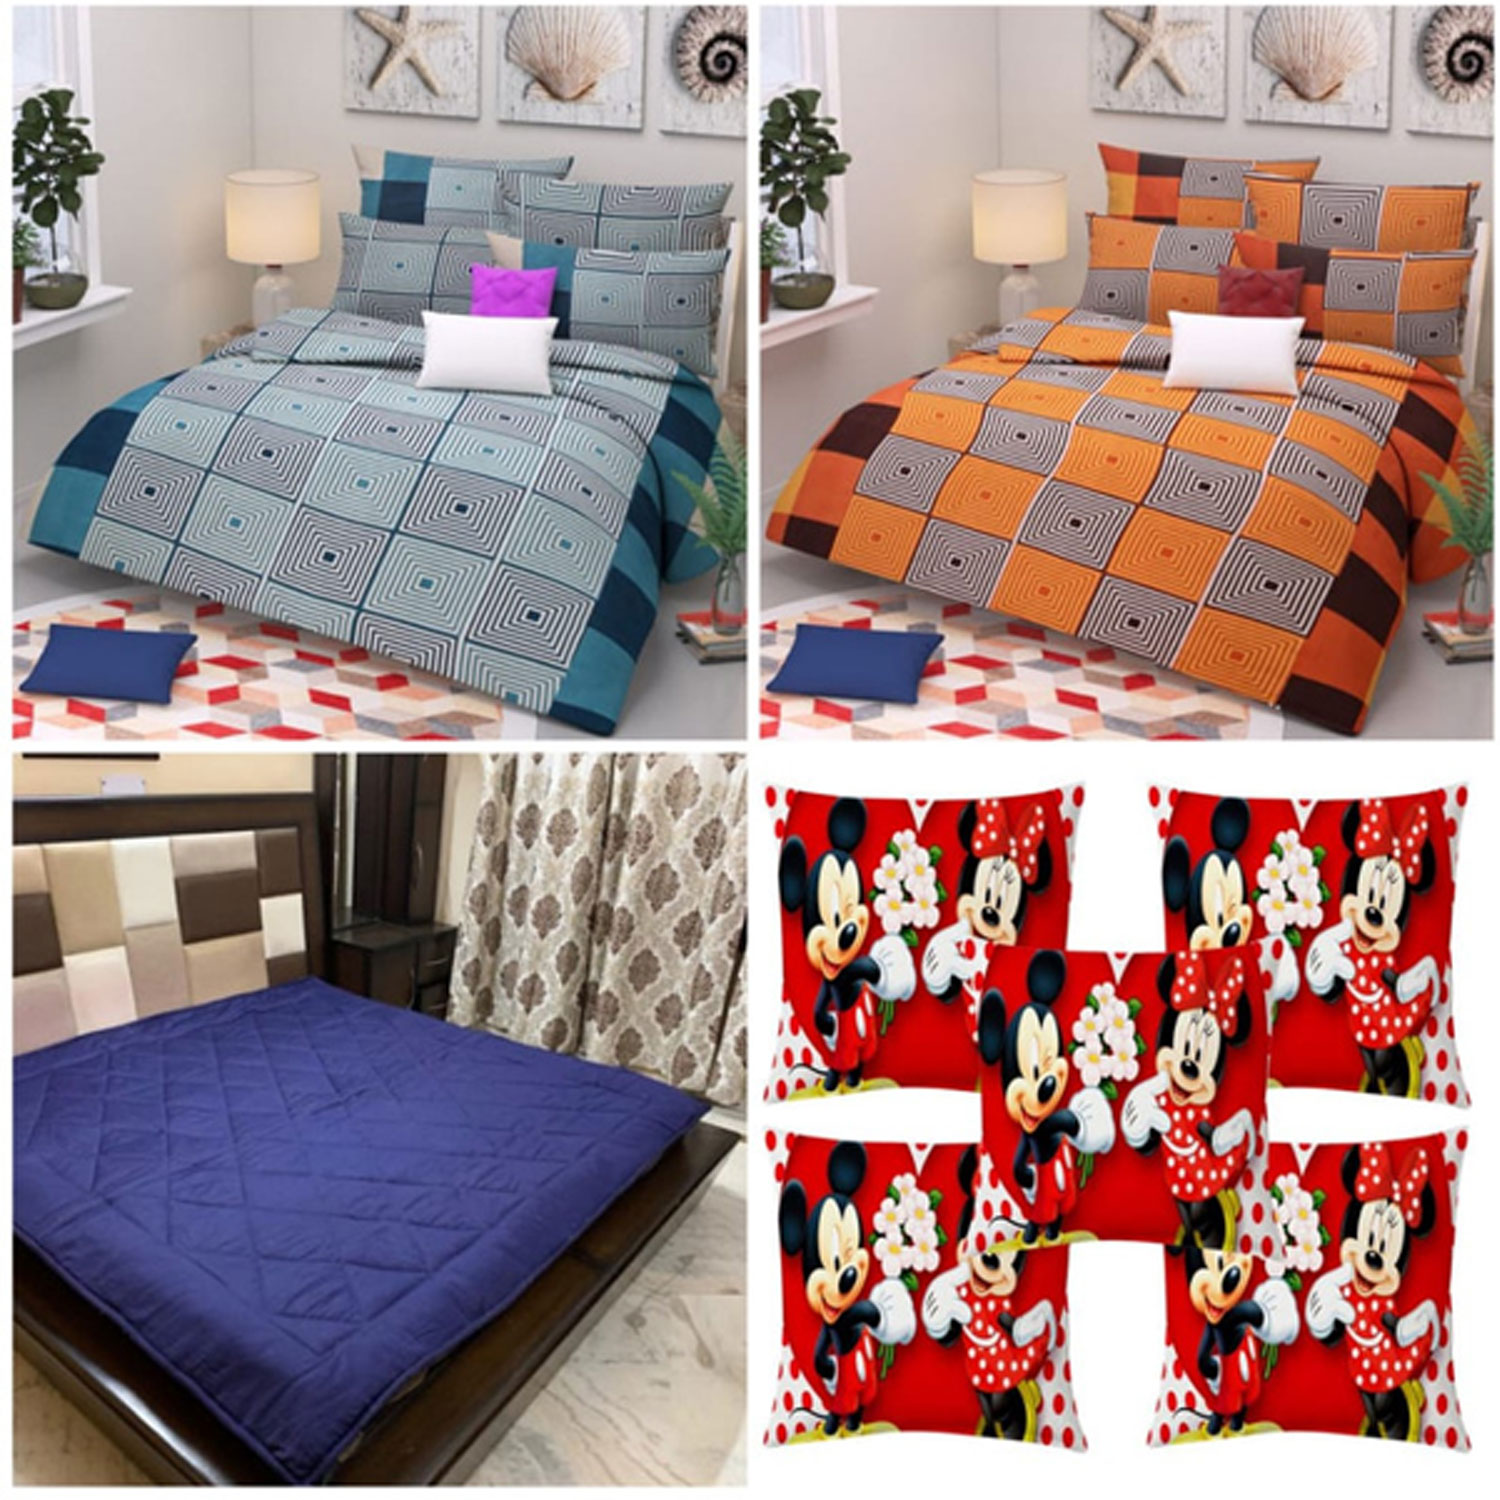 HOMDAZAL Combo of 2 Pcs 3D Printed Double Bedsheet & 1 Pcs Mattresses Cover & 5 Pcs Cushion Covers Set |Pack of 1